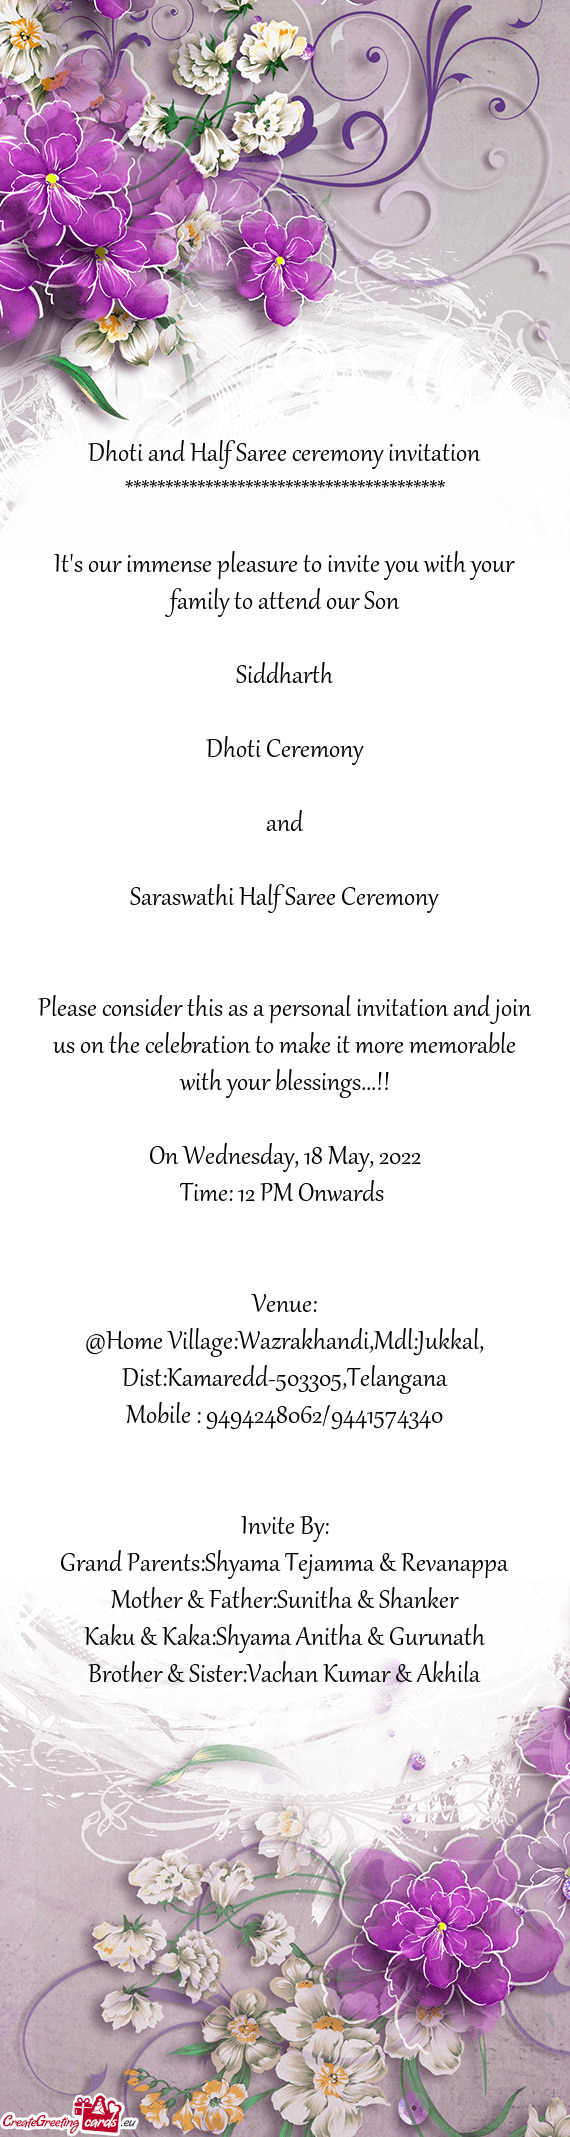 Saraswathi Half Saree Ceremony